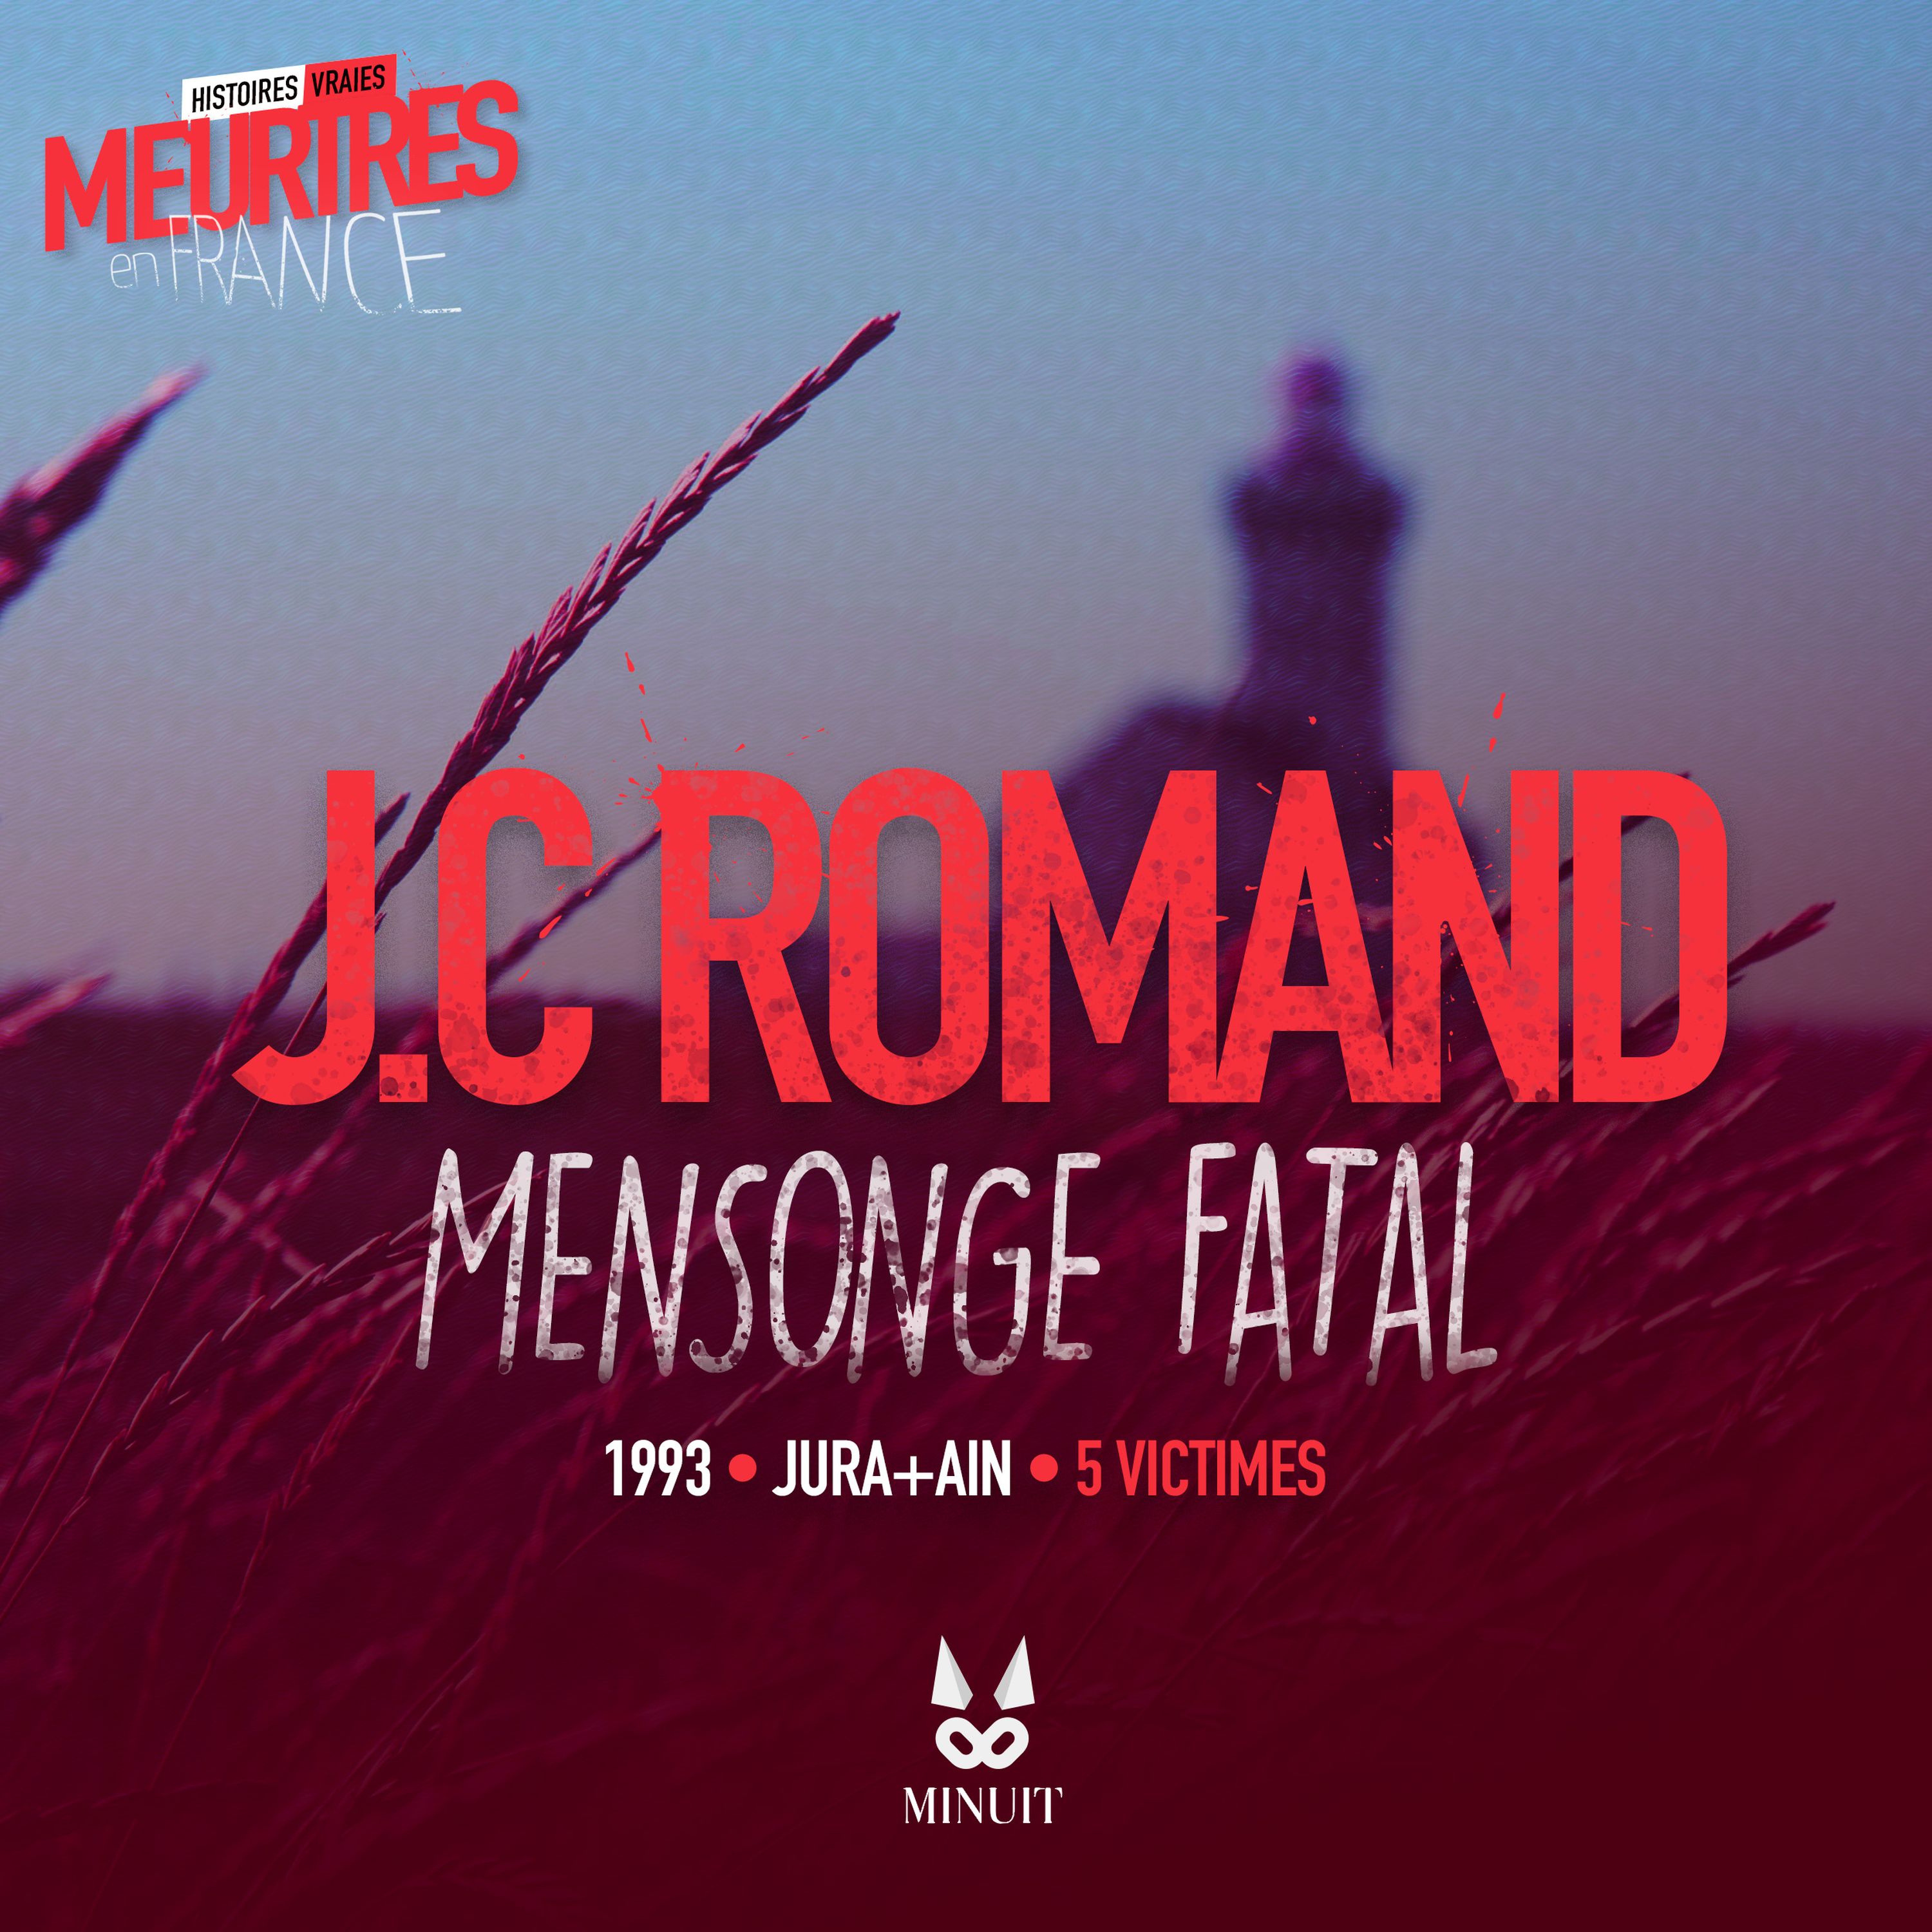 L’affaire Jean-Claude ROMAND  • Mensonge fatal